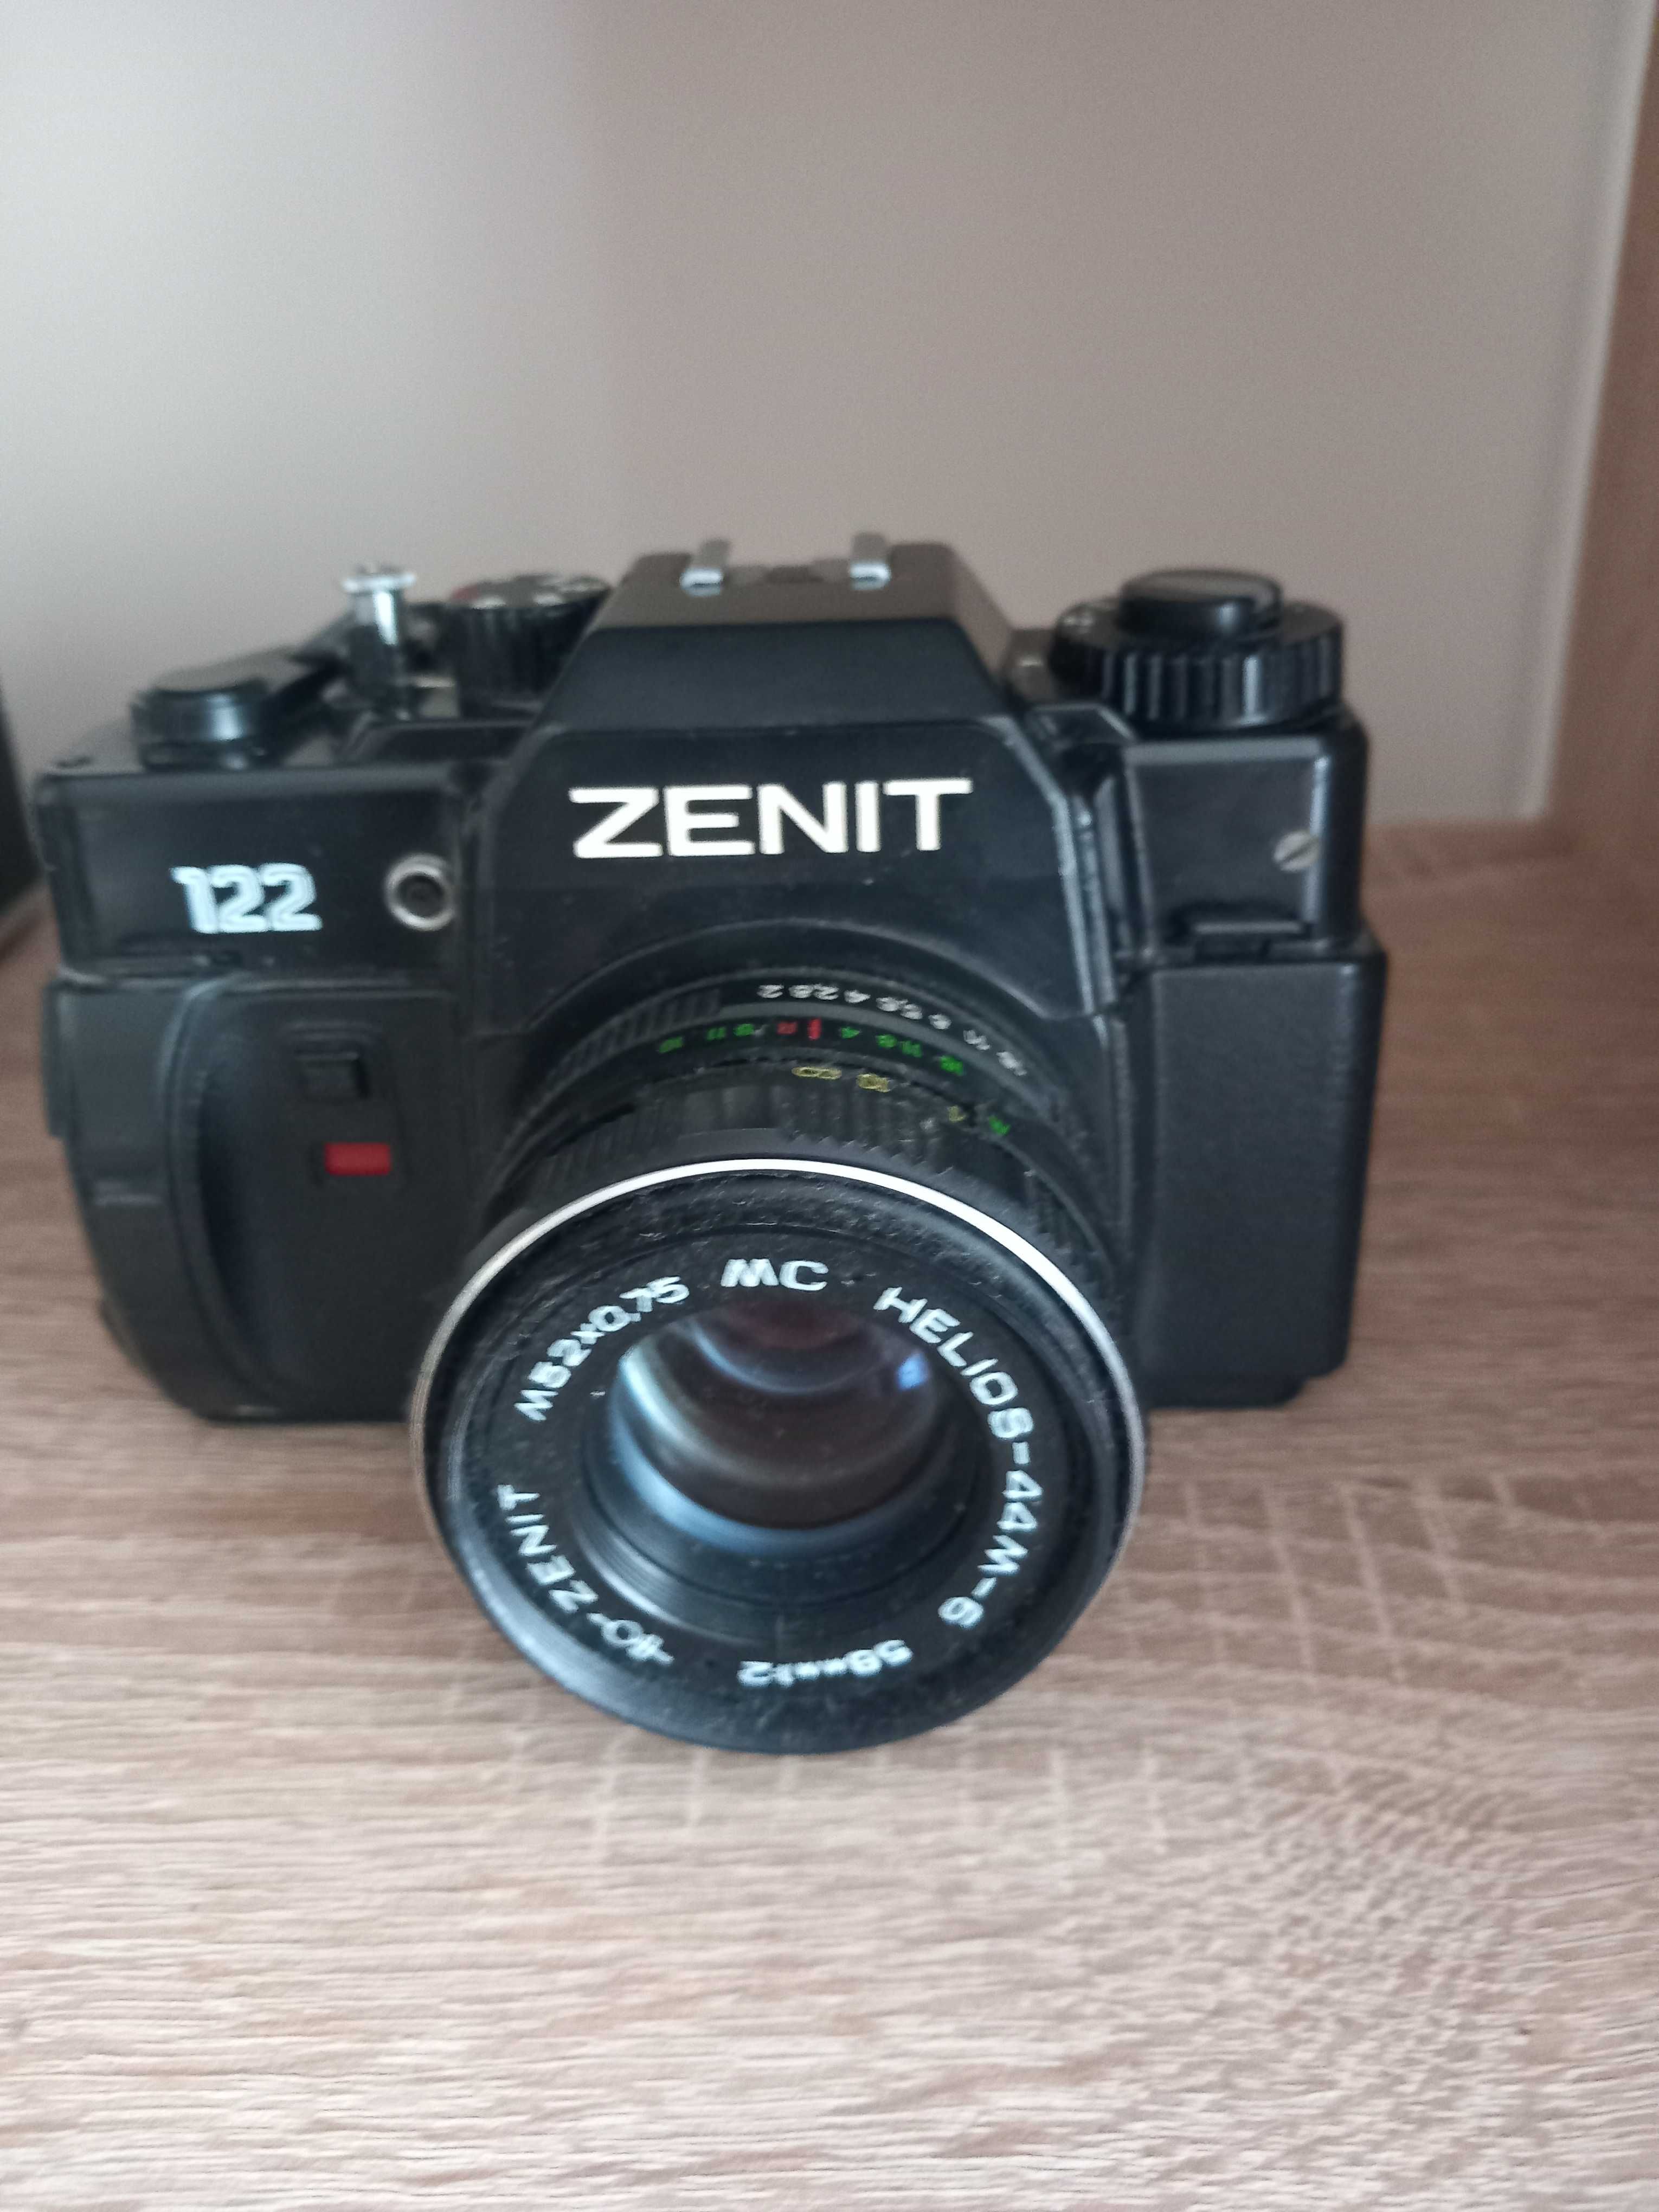 Zenit 122  aparat fotograficzny PRL